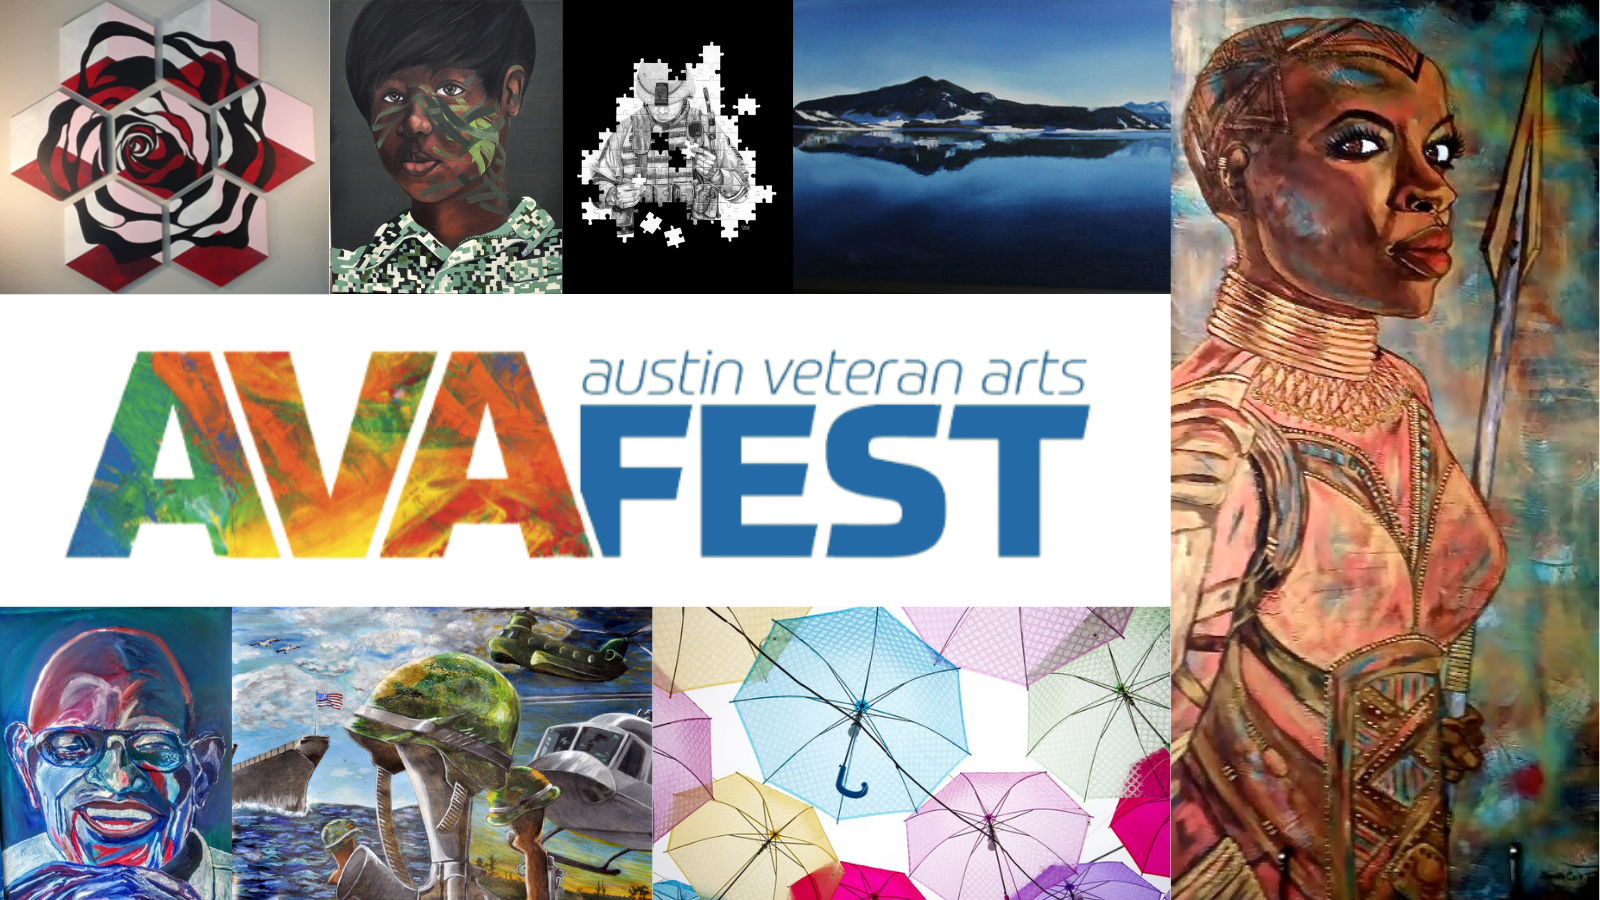 Austin Veteran Arts Fest